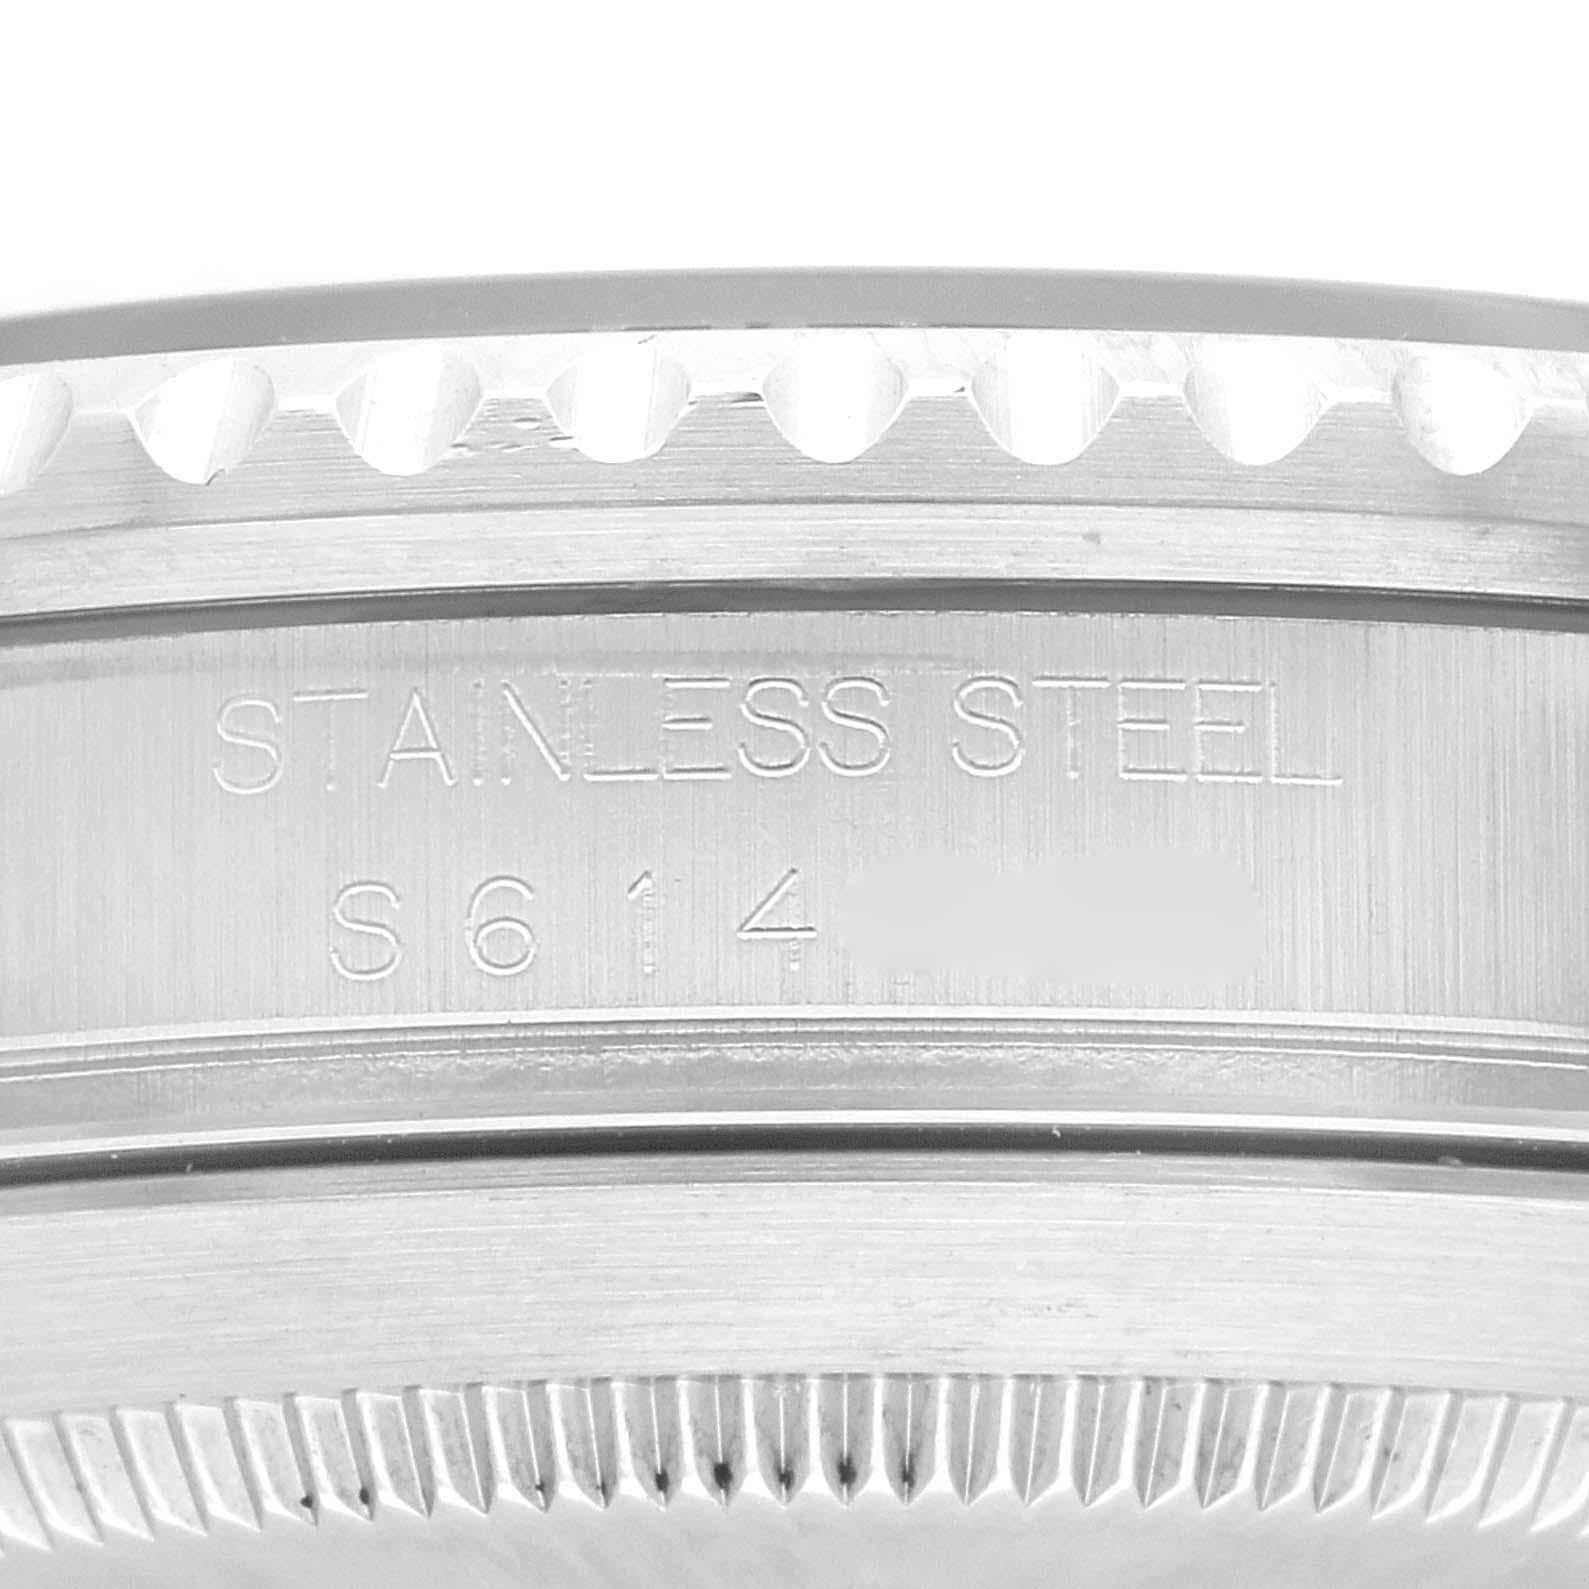 Men's Rolex Submariner Date Black Dial Steel Mens Watch 16610 Box Papers